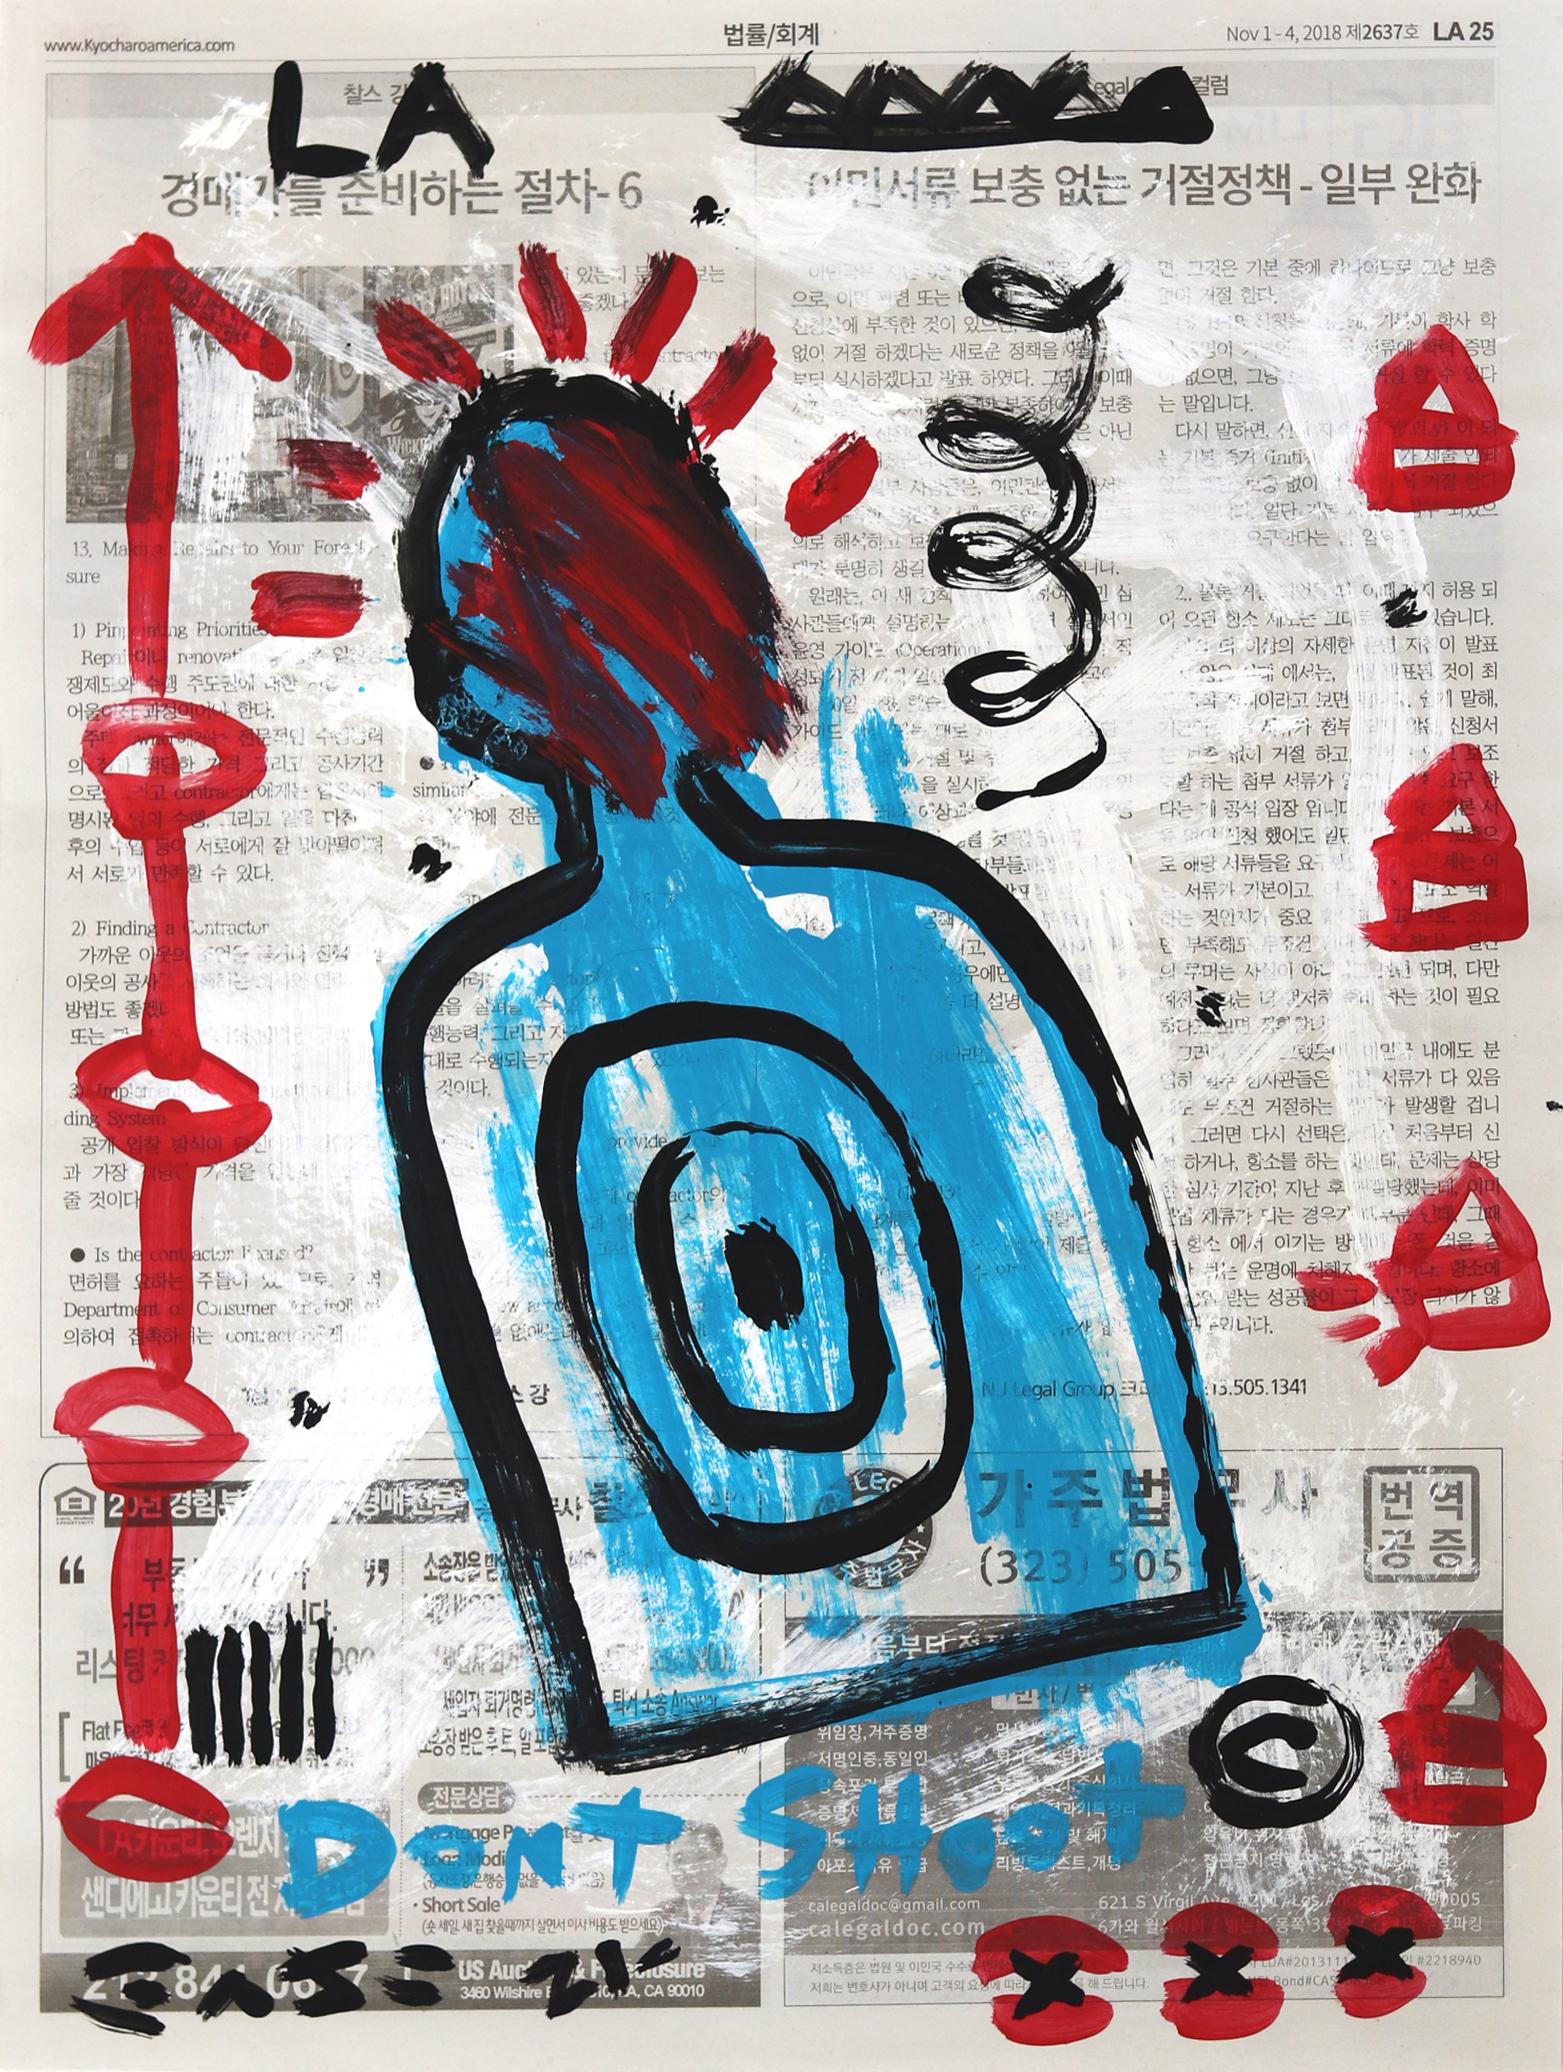 Anti-Target Practice - Original Gary John Pop Art Painting on Newspaper